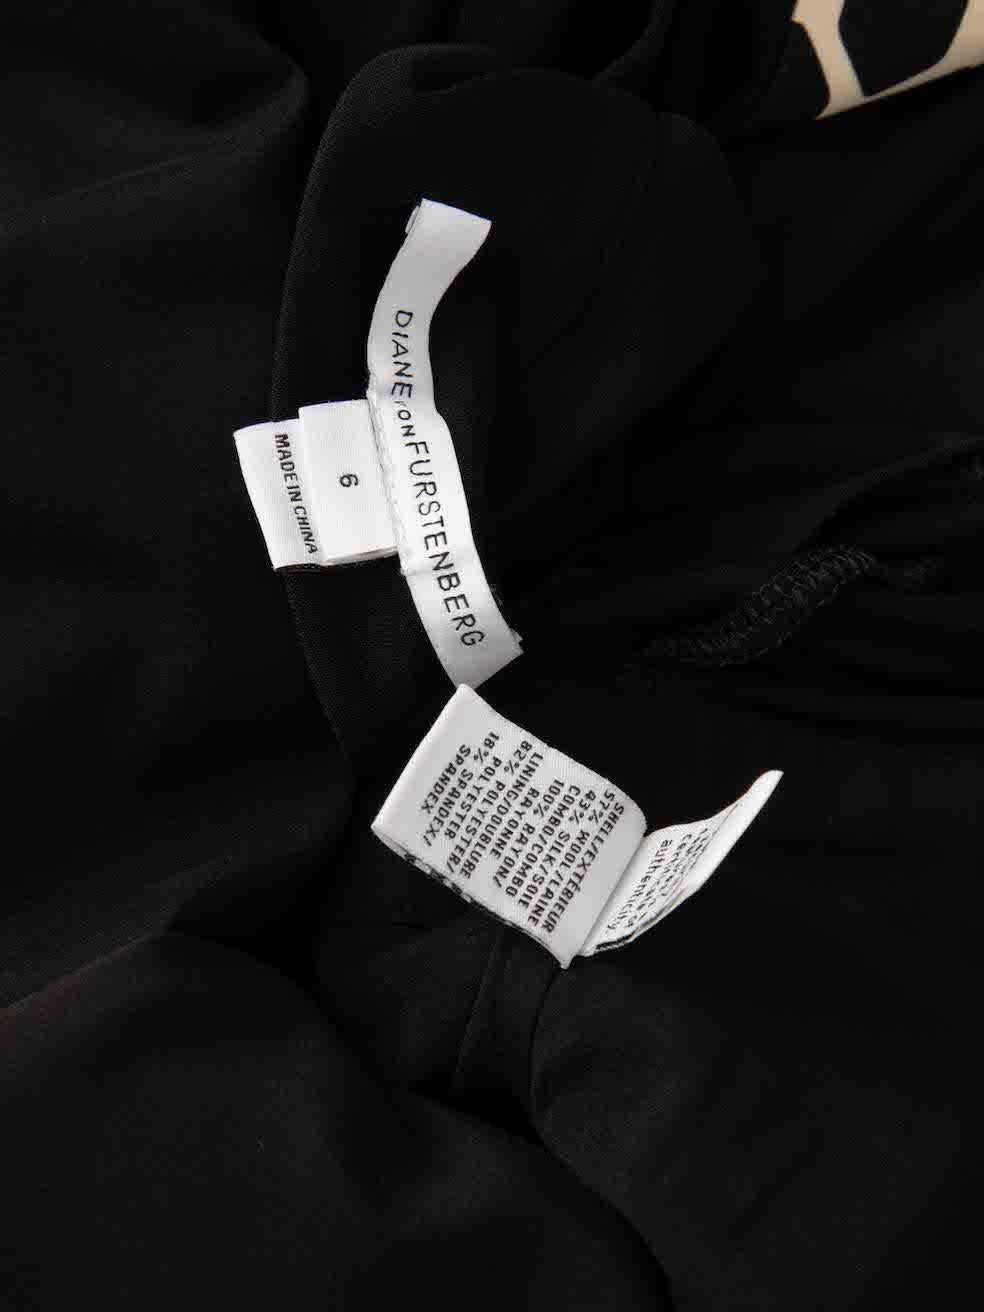 Diane Von Furstenberg Black Wool Patterned Wrap Dress Size M 1